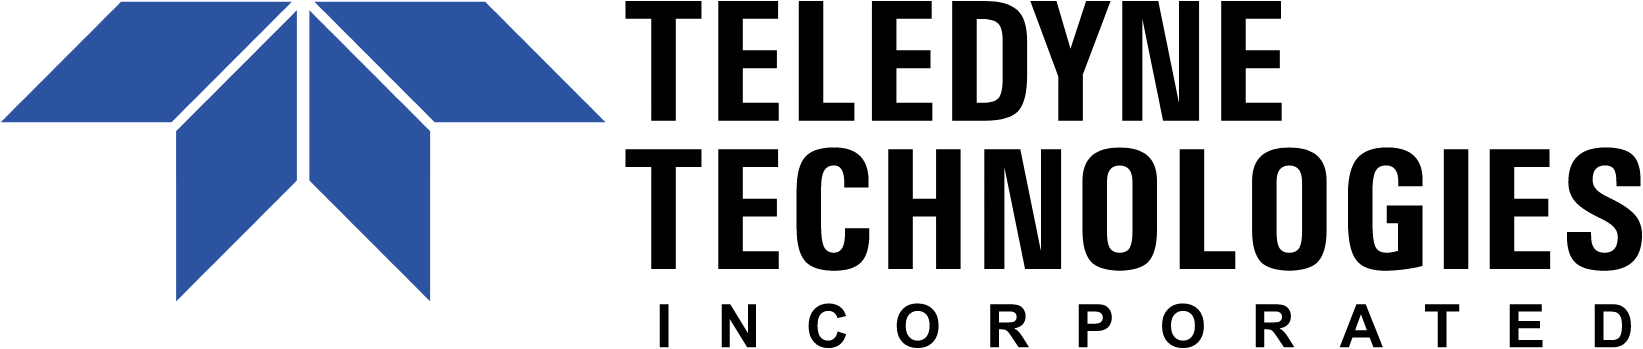 Teledyne logo large (transparent PNG)